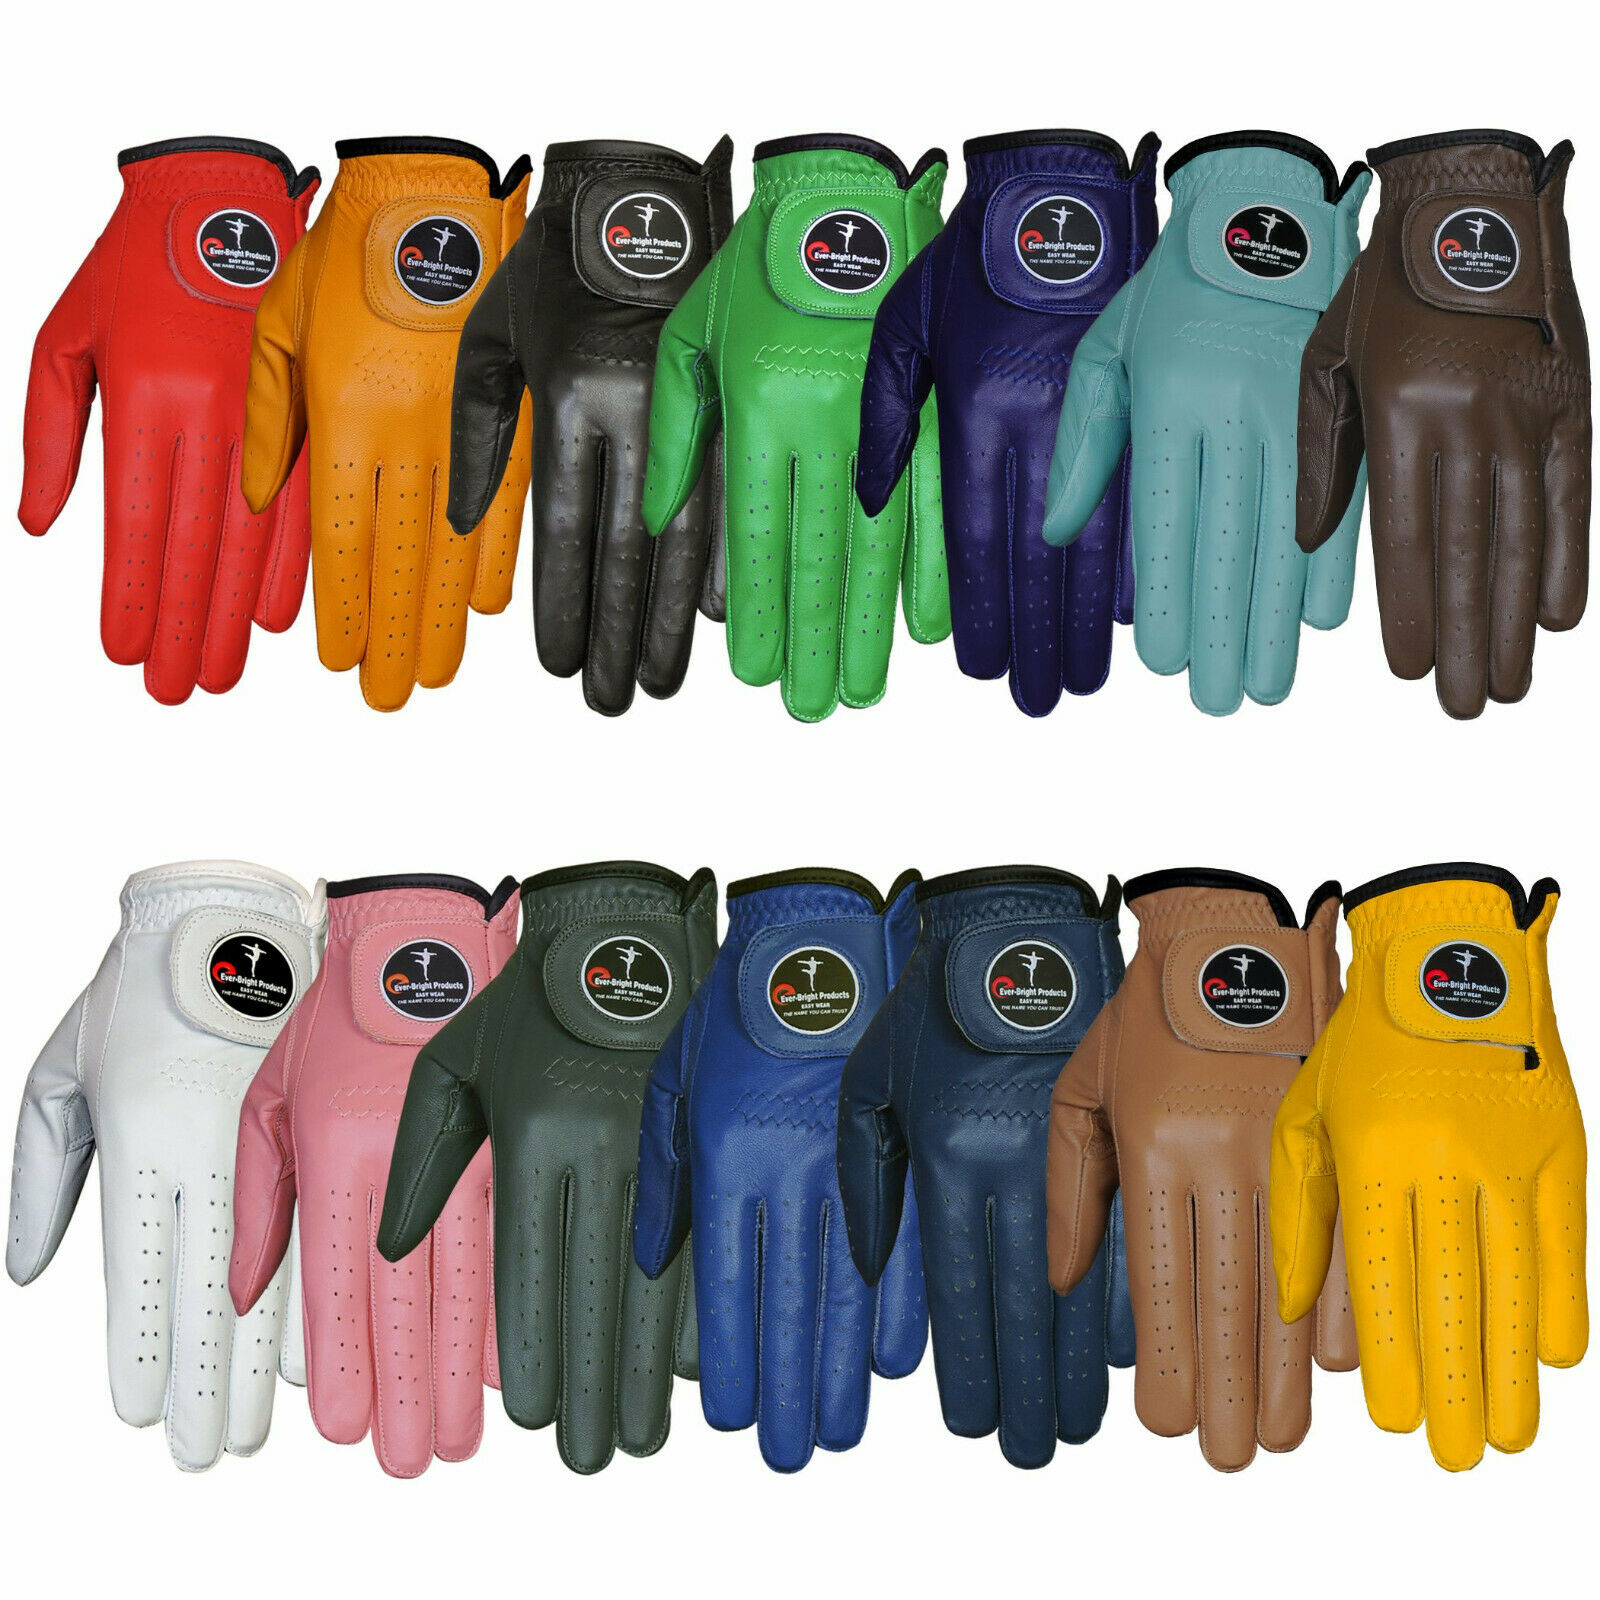 Men's Golf Gloves Opticolor Premium Leather Golf Glove/ All Colors & Sizes